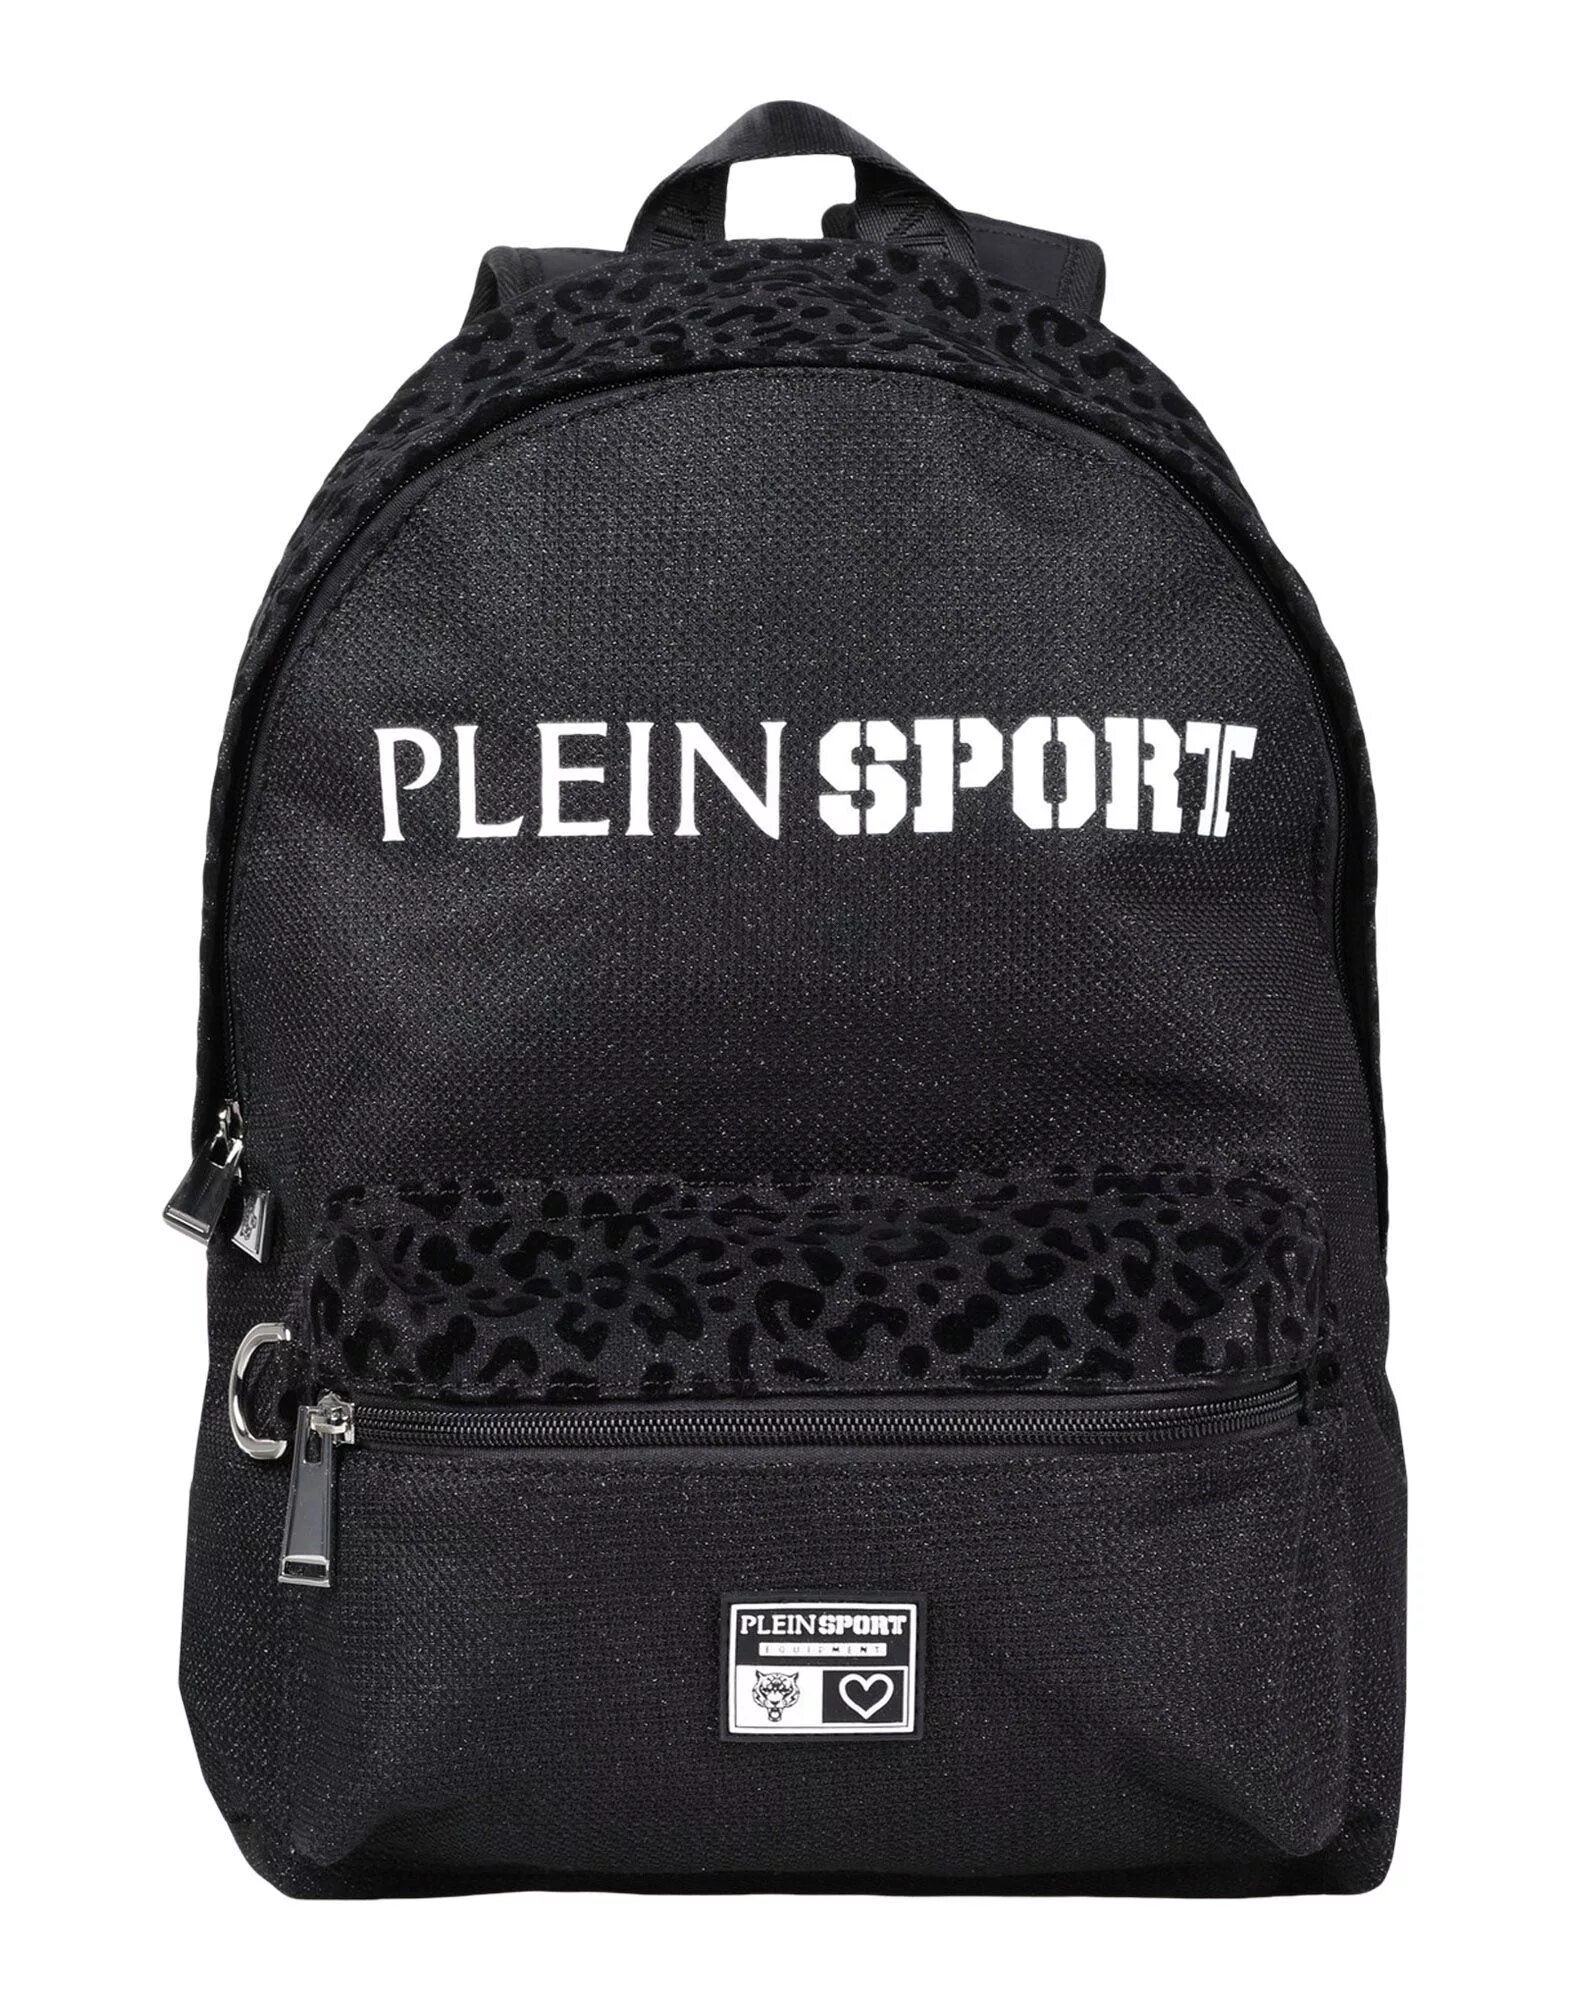 Plein sport. Сумка поясная plein Sport. Plein Sport рюкзак. Plein Sport портфель. Плейн спорт рюкзак женский.